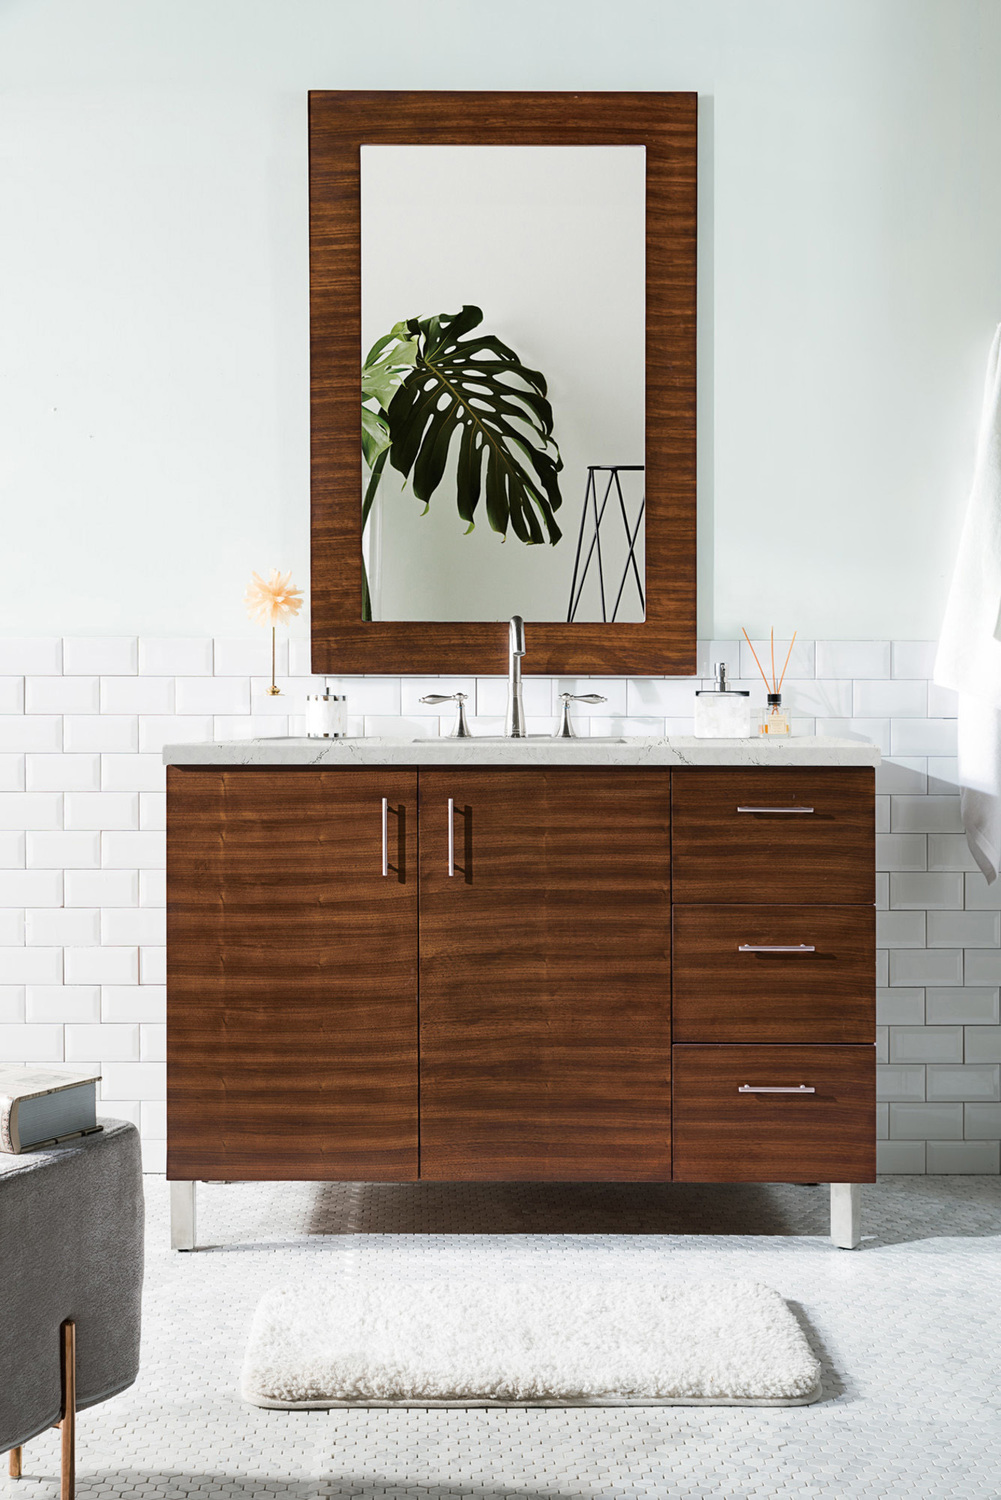 lavatory cabinet design James Martin Vanity American Walnut Contemporary/Modern, Transitional